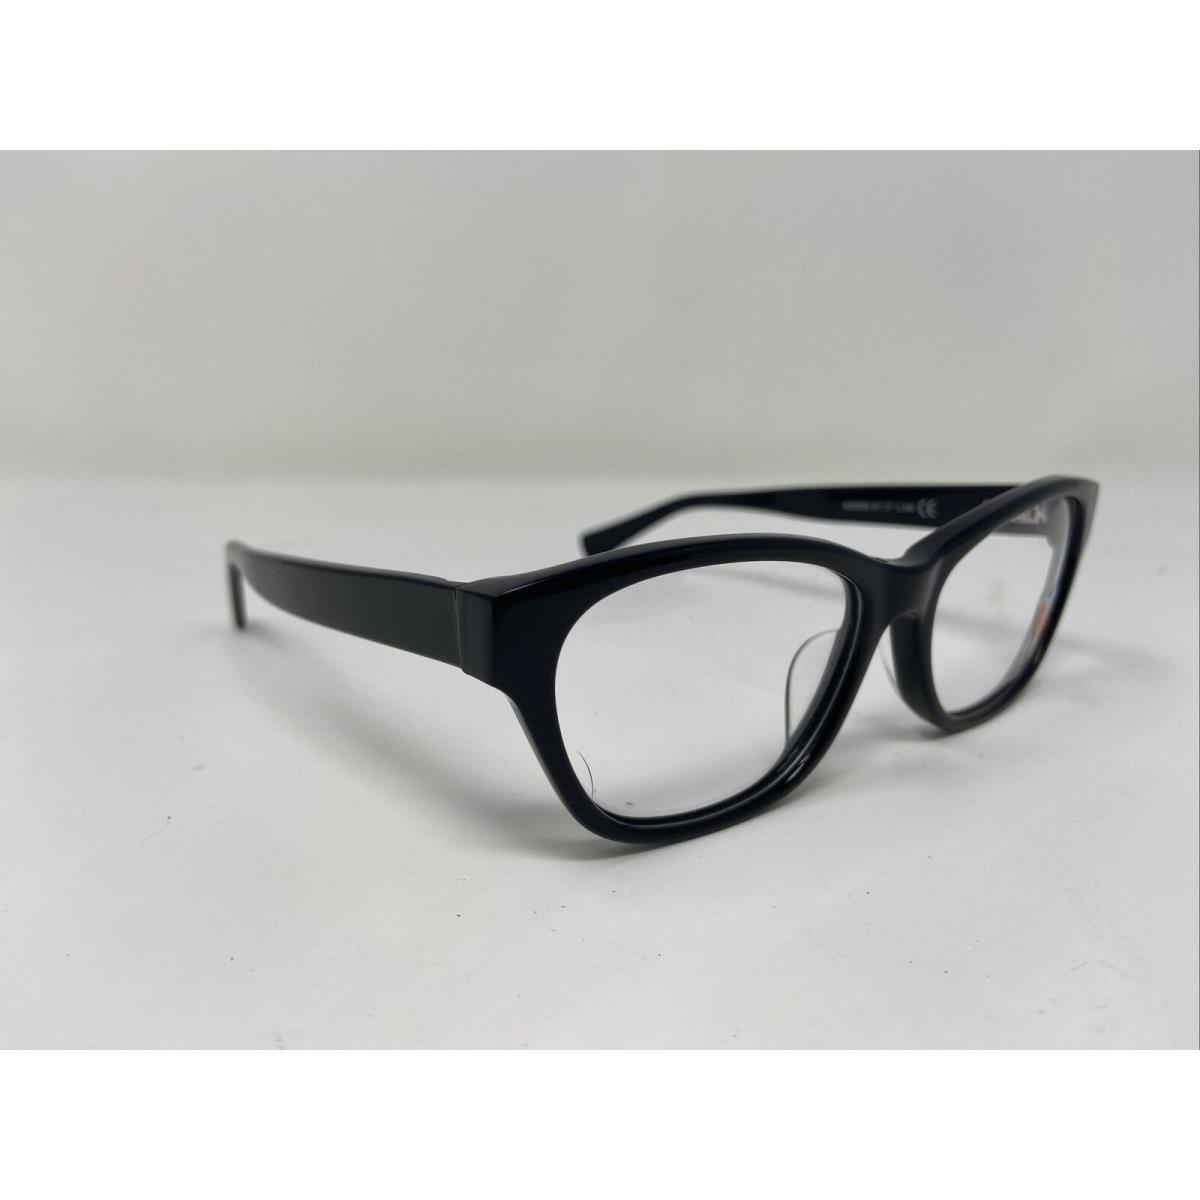 Maui Jim eyeglasses  - Black Frame 2